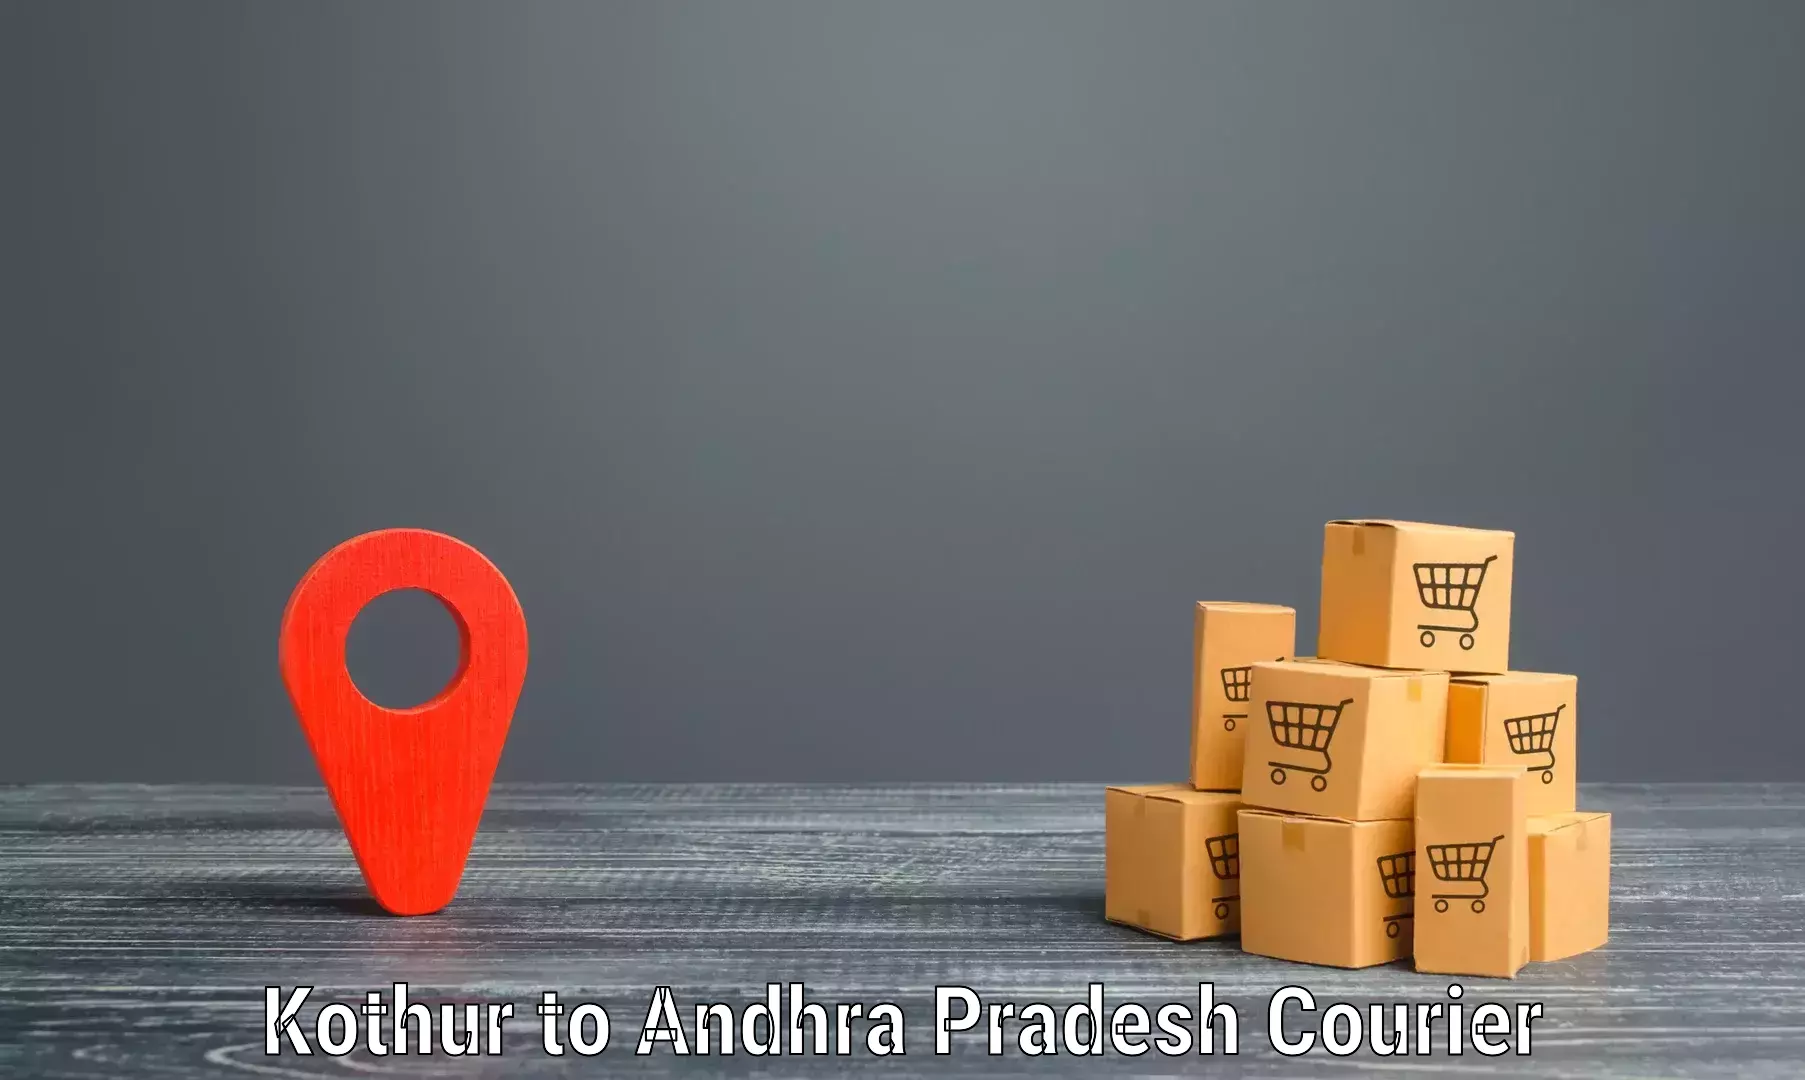 Automated parcel services Kothur to Visakhapatnam